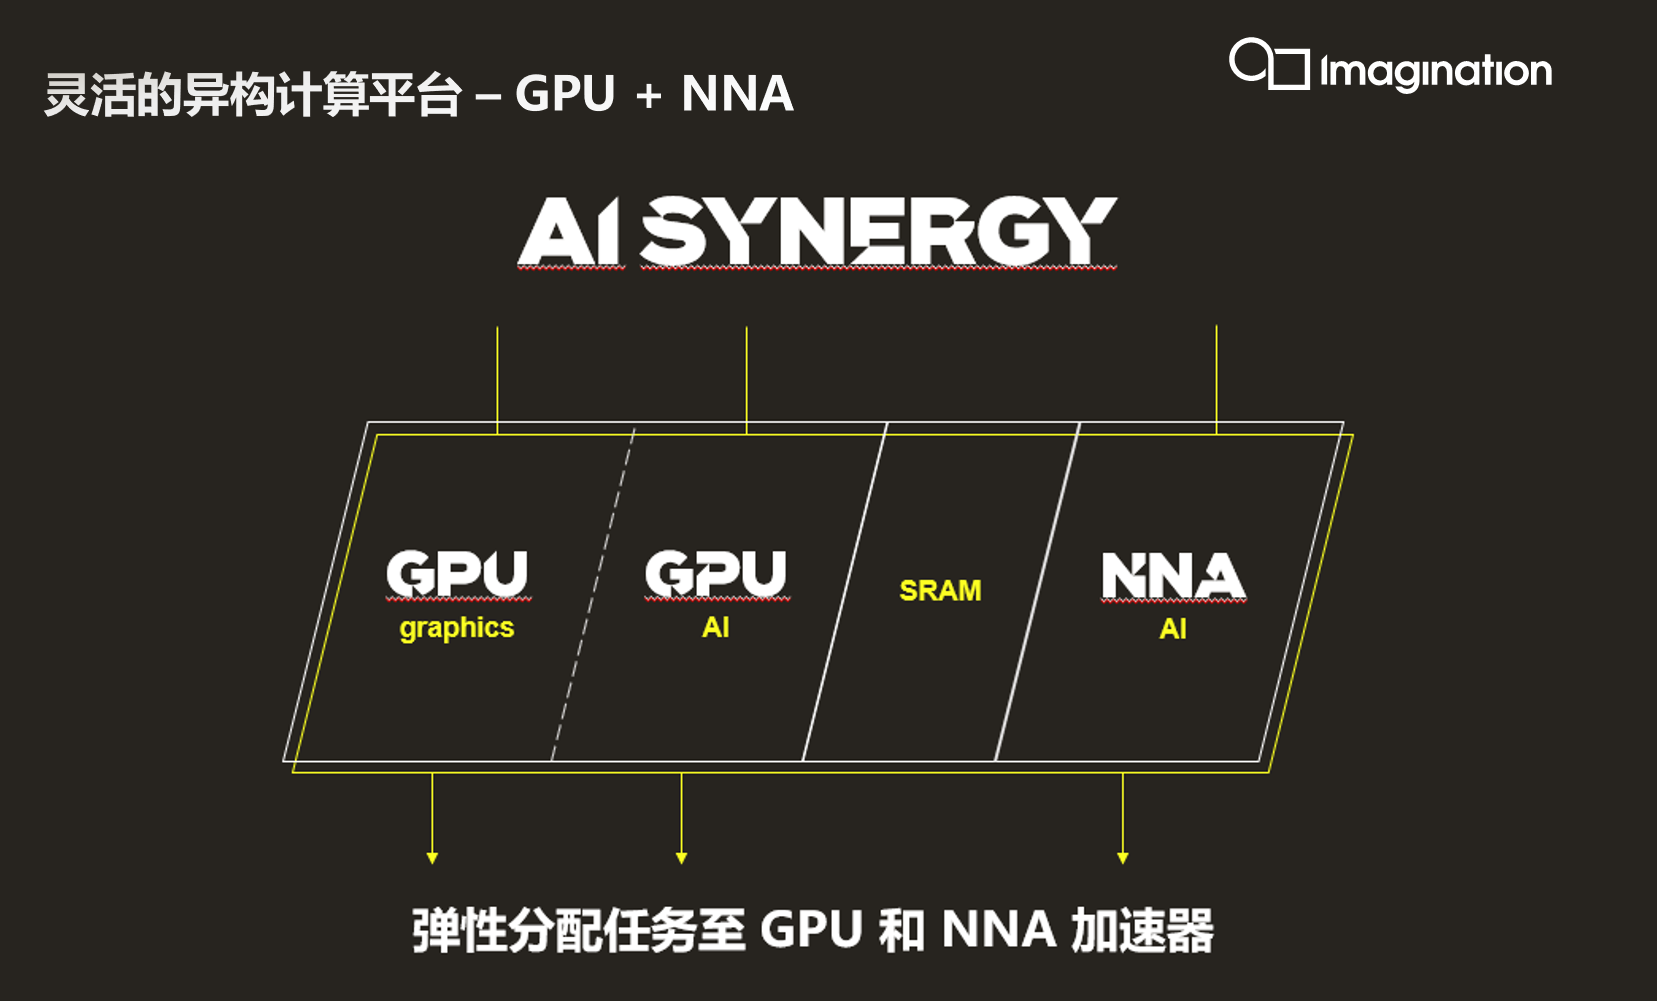 GPU+NNA异构计算平台兼具高算力和灵活性